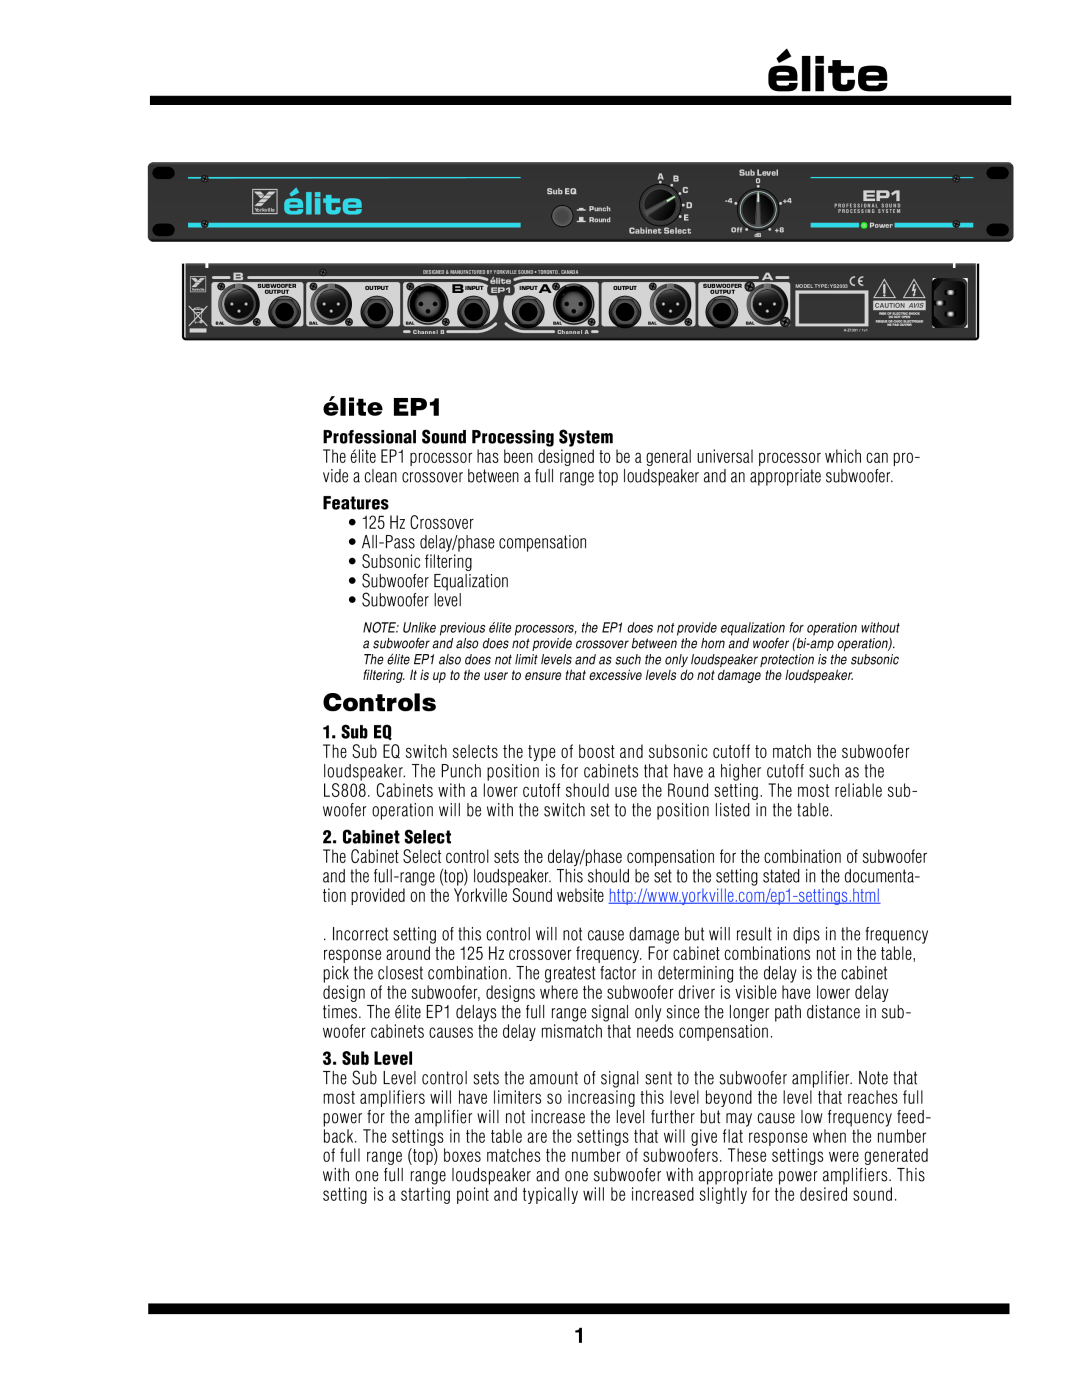 Yorkville Sound YS2003 élite EP1, Controls, Professional Sound Processing System, Features, Hz Crossover, Subwoofer level 